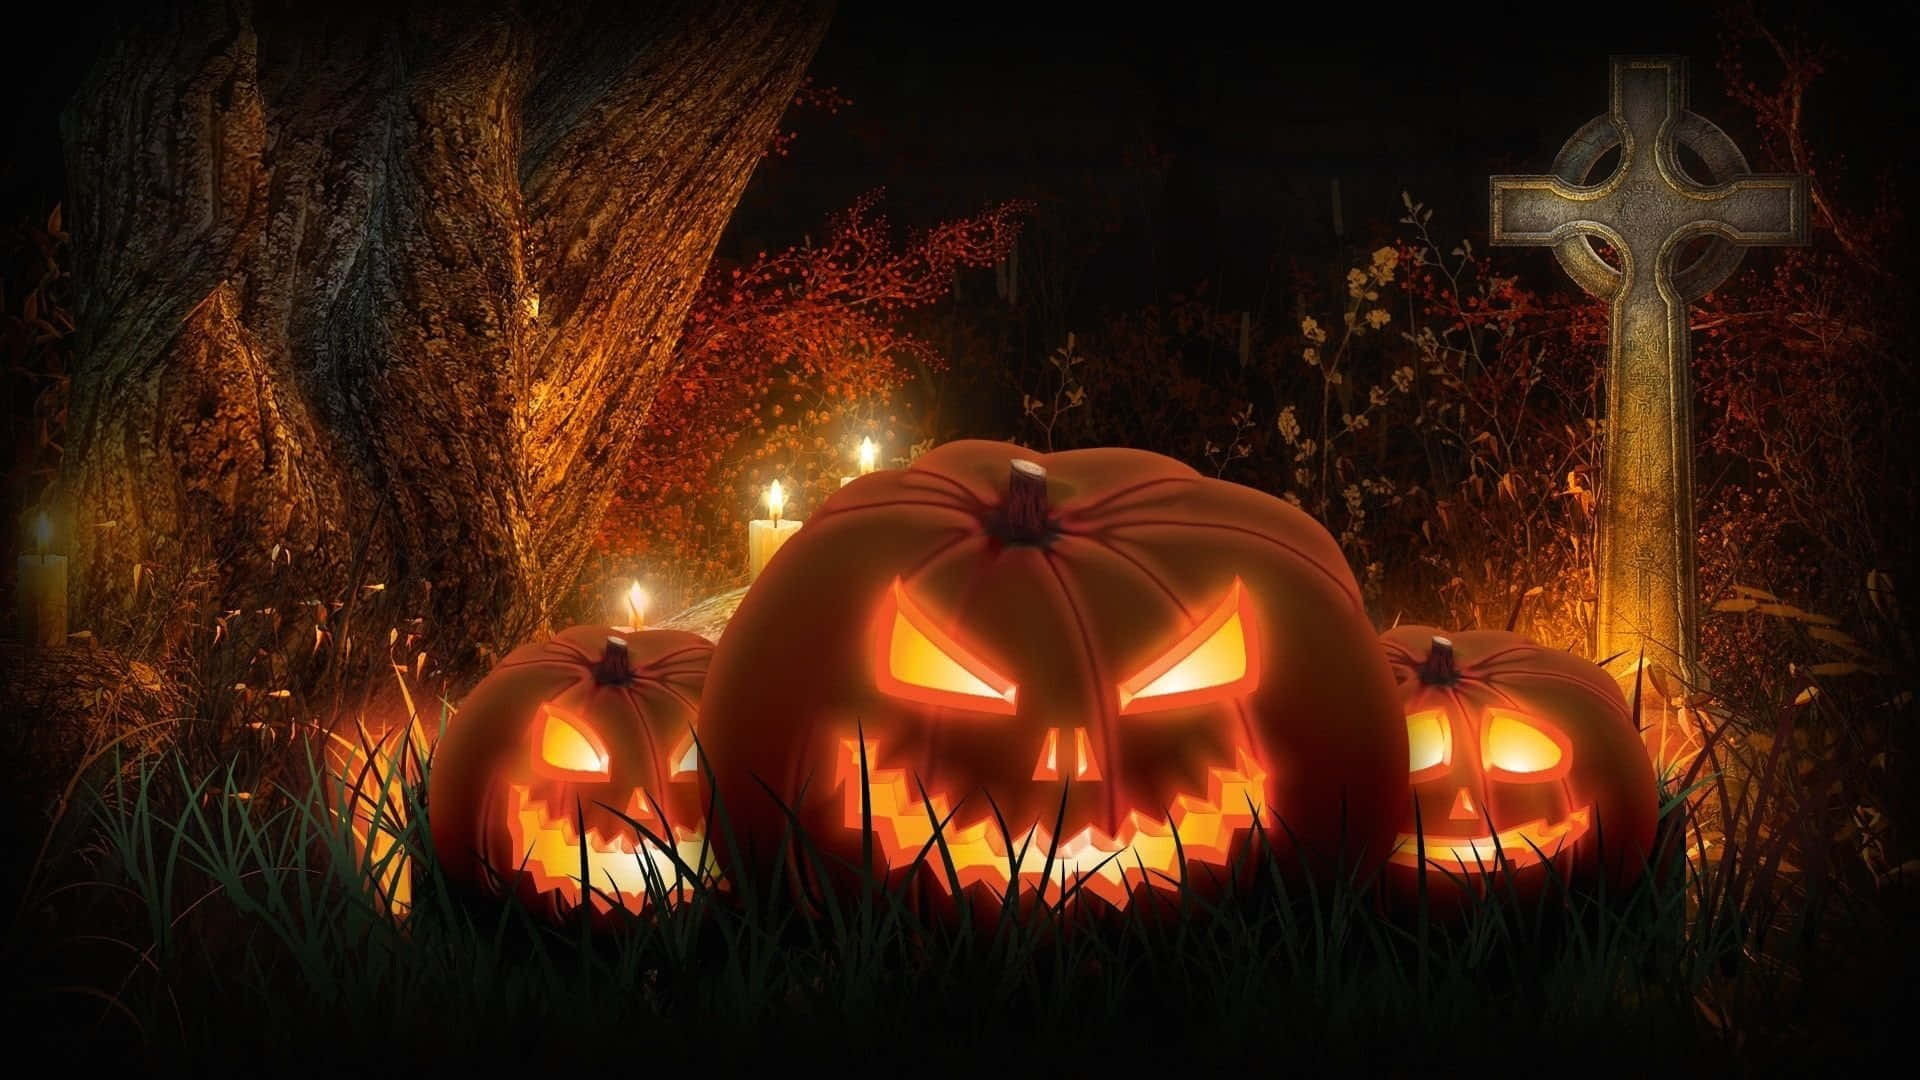 Halloween Pumpkins In The Dark With A Cross